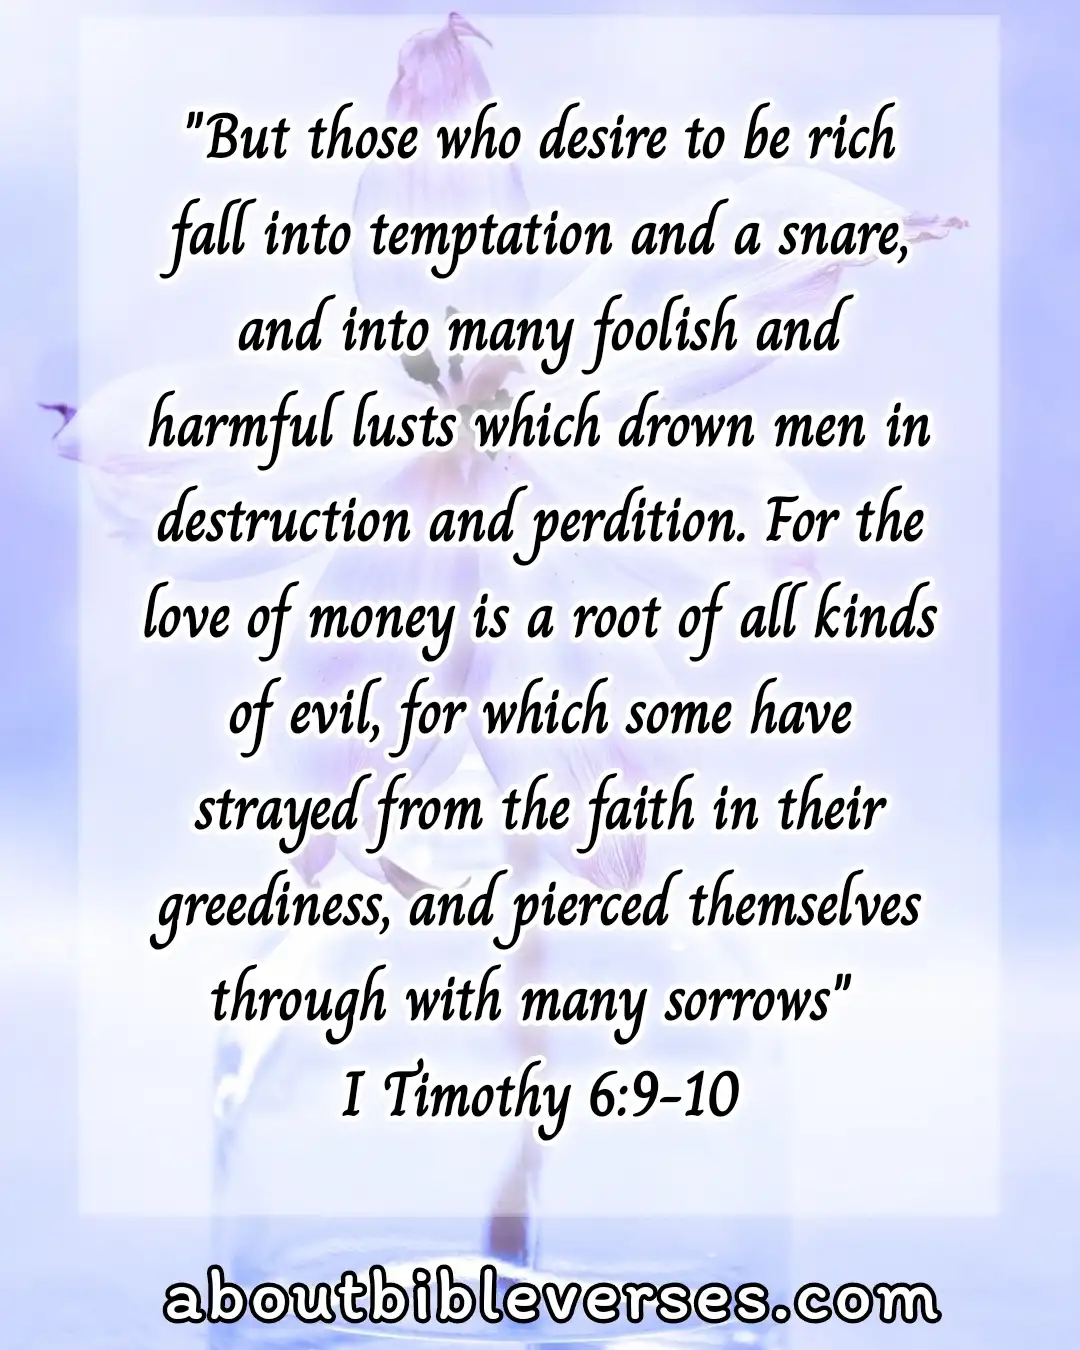 Verses Do Not Love Money (1 Timothy 6:9-10)